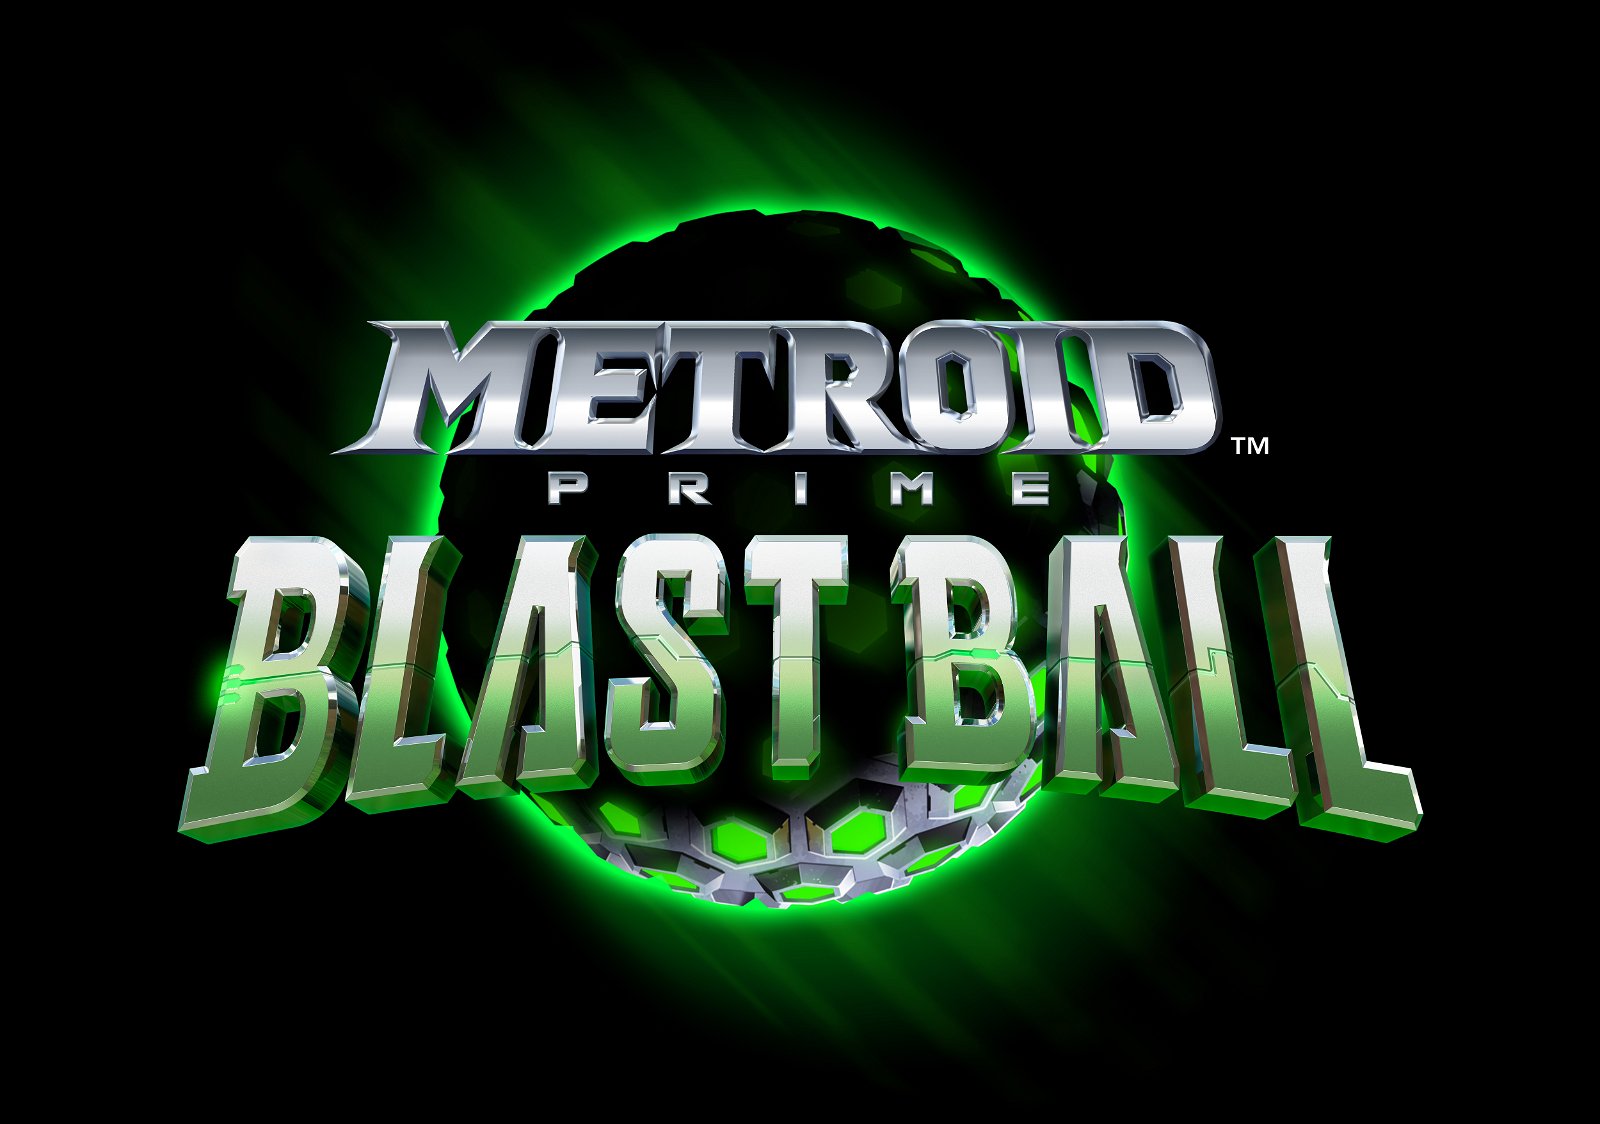 Image of Metroid Prime: Blast Ball